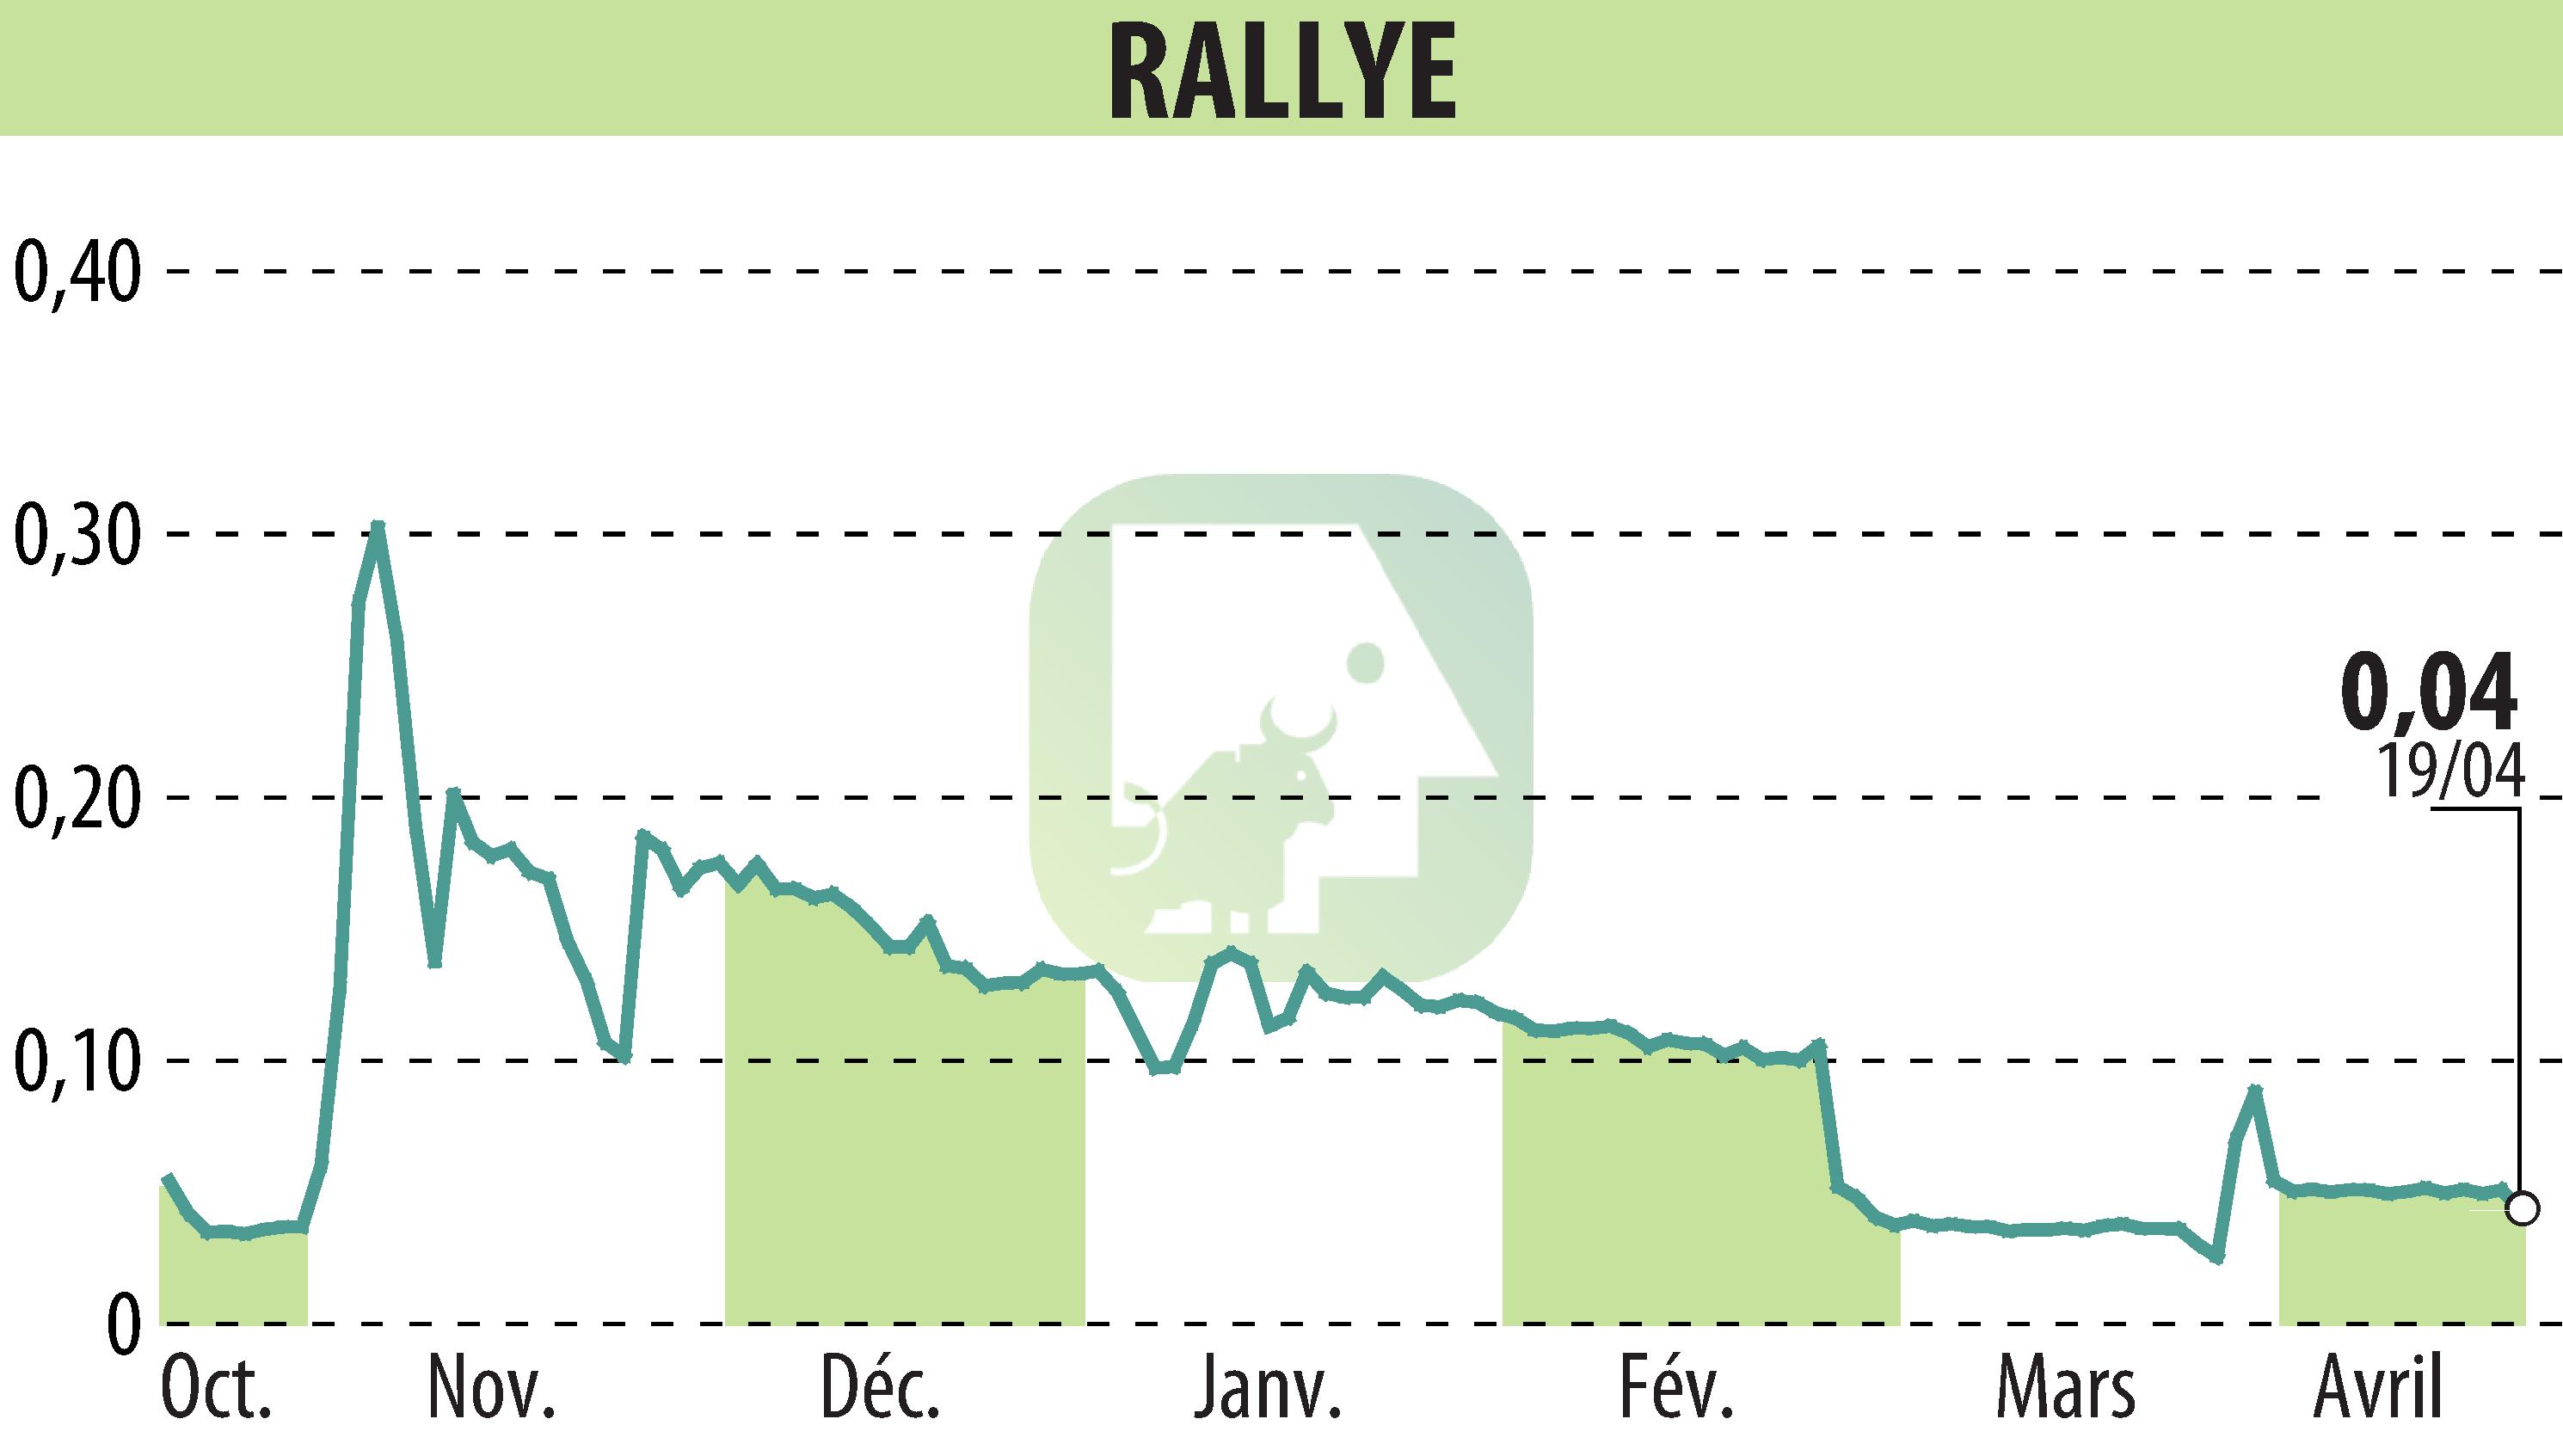 Stock price chart of RALLYE (EPA:RAL) showing fluctuations.